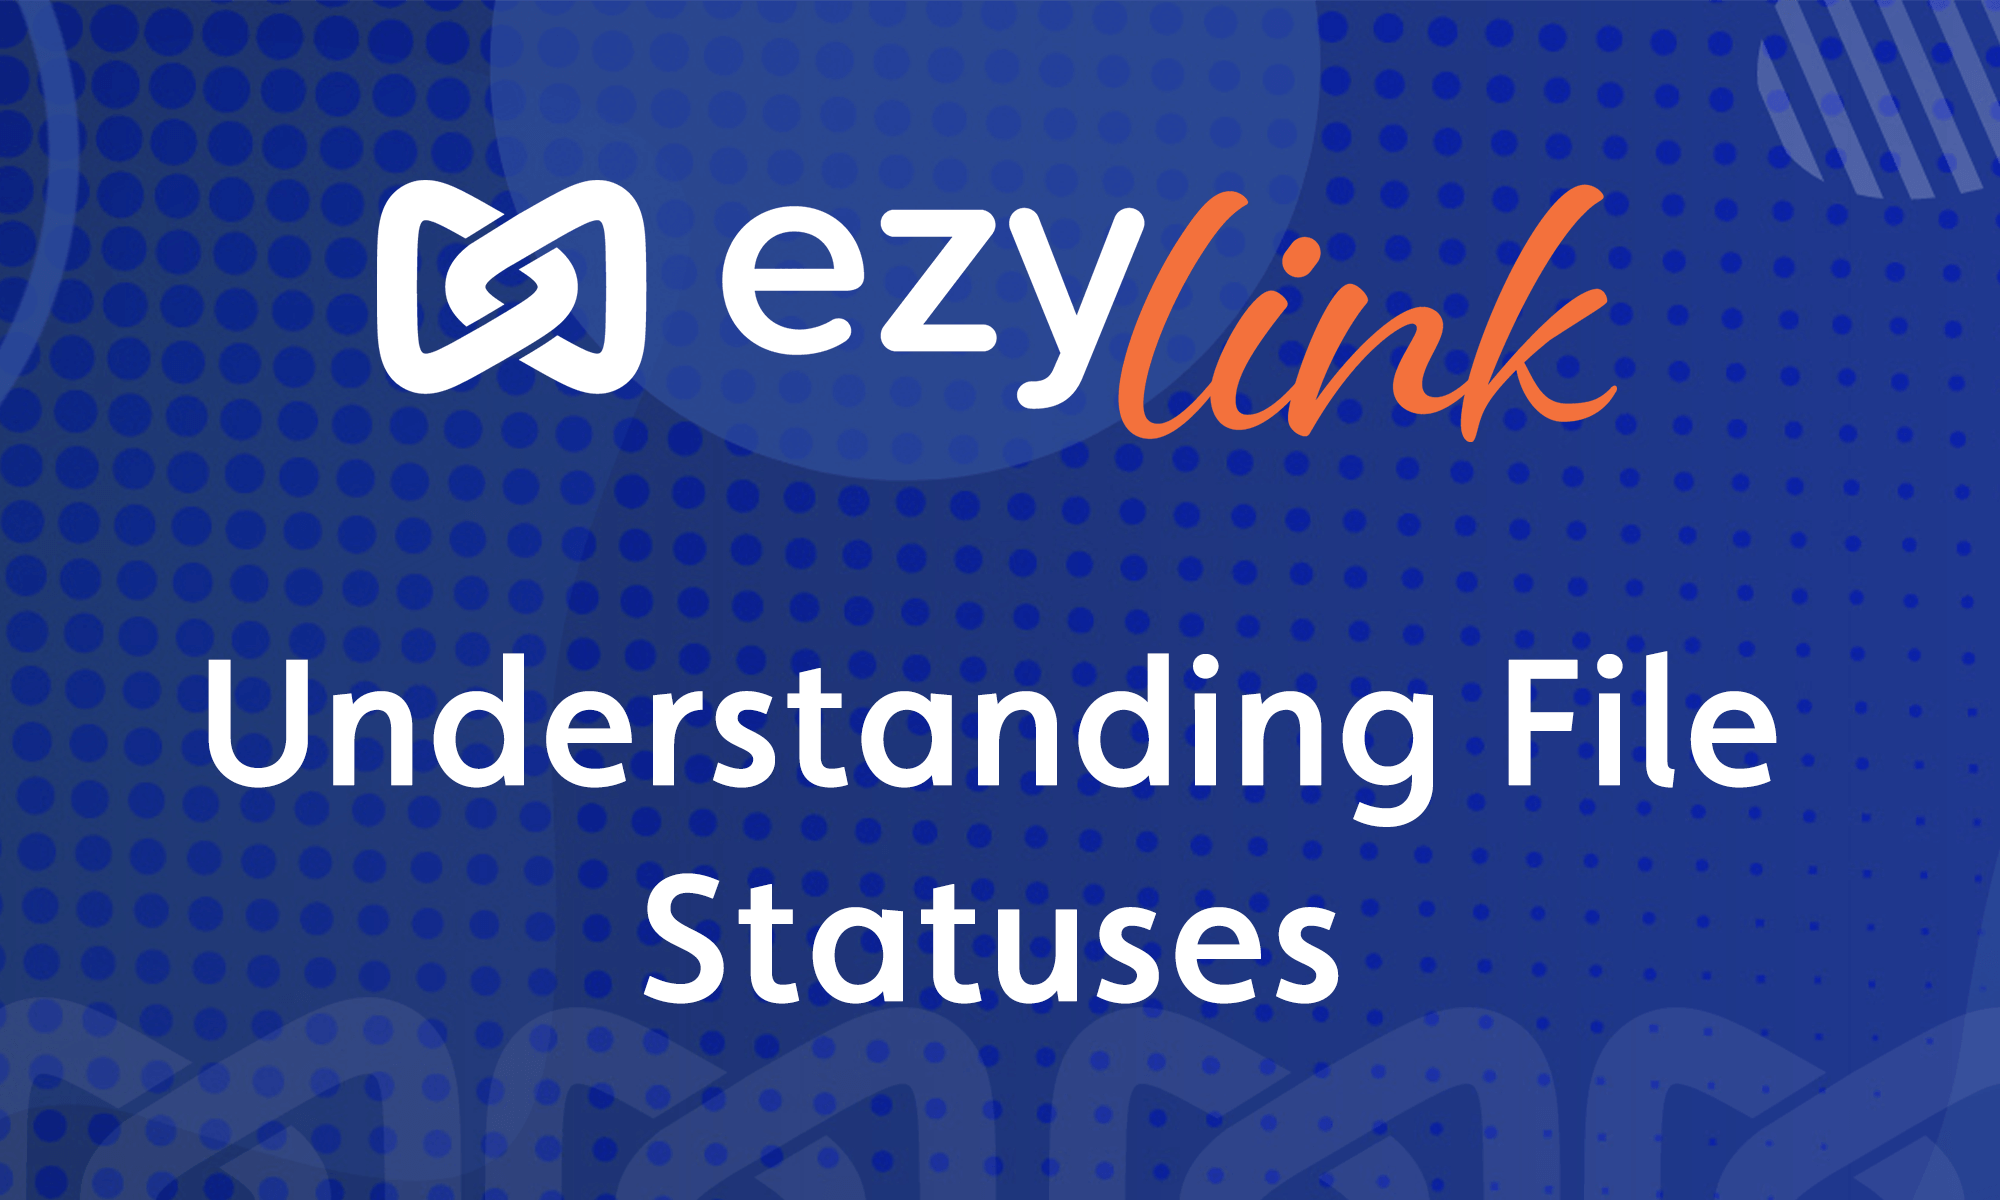 Featured image for “Ezylink Cloud – Understanding File Statuses”